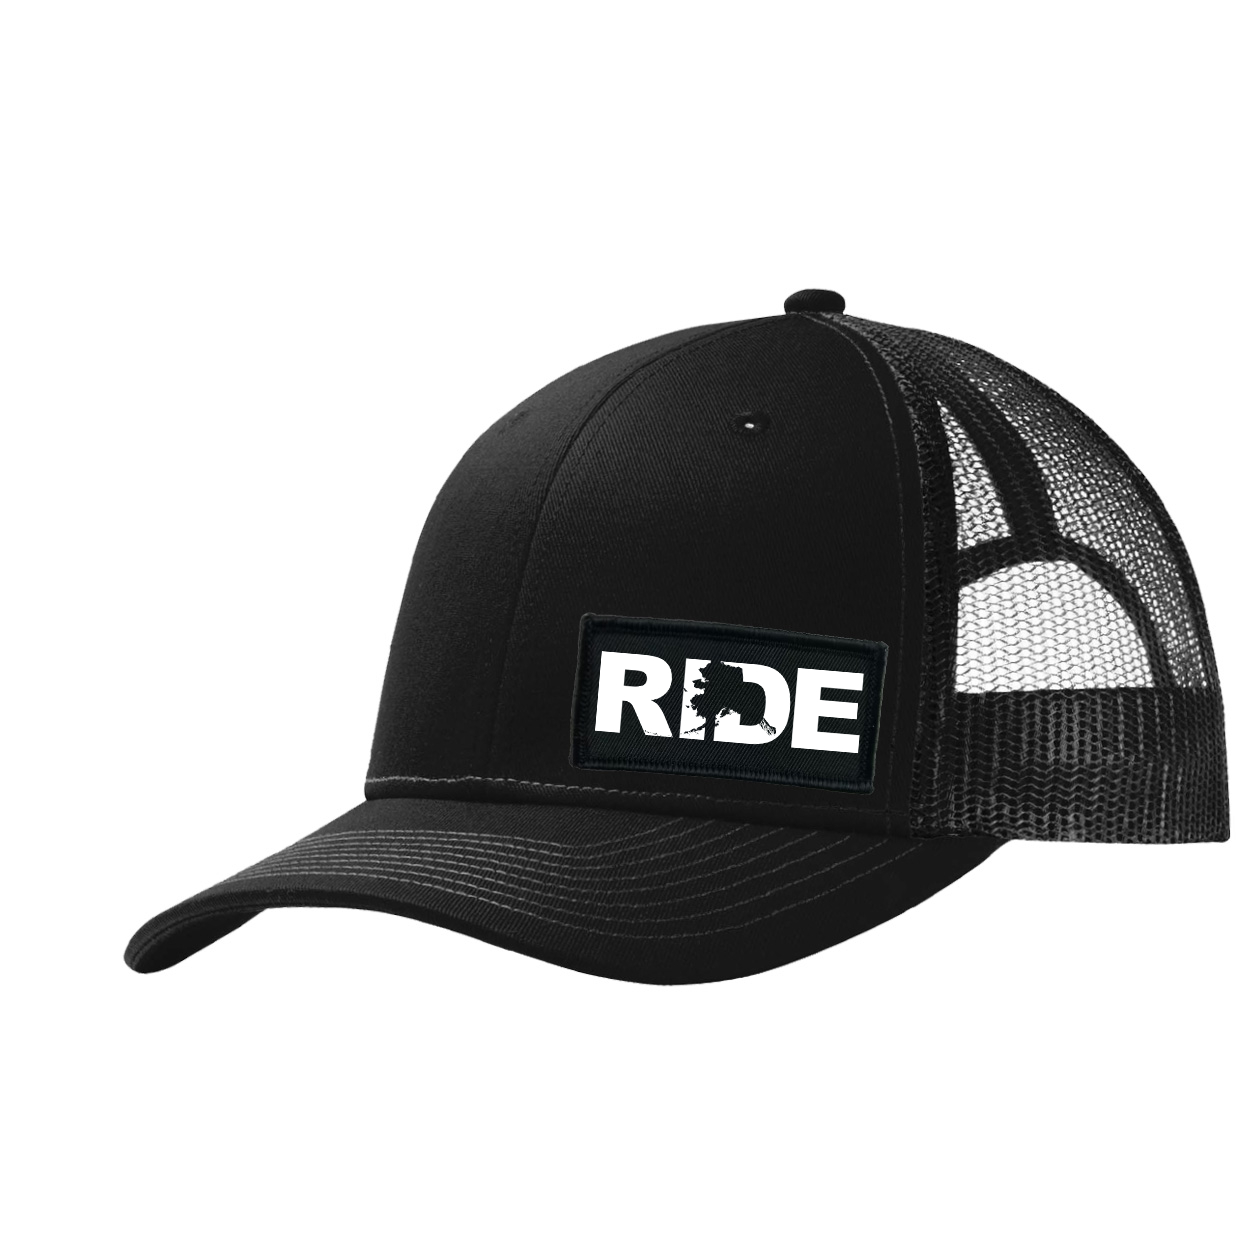 Ride Alaska Night Out Woven Patch Snapback Trucker Hat Black (White Logo)